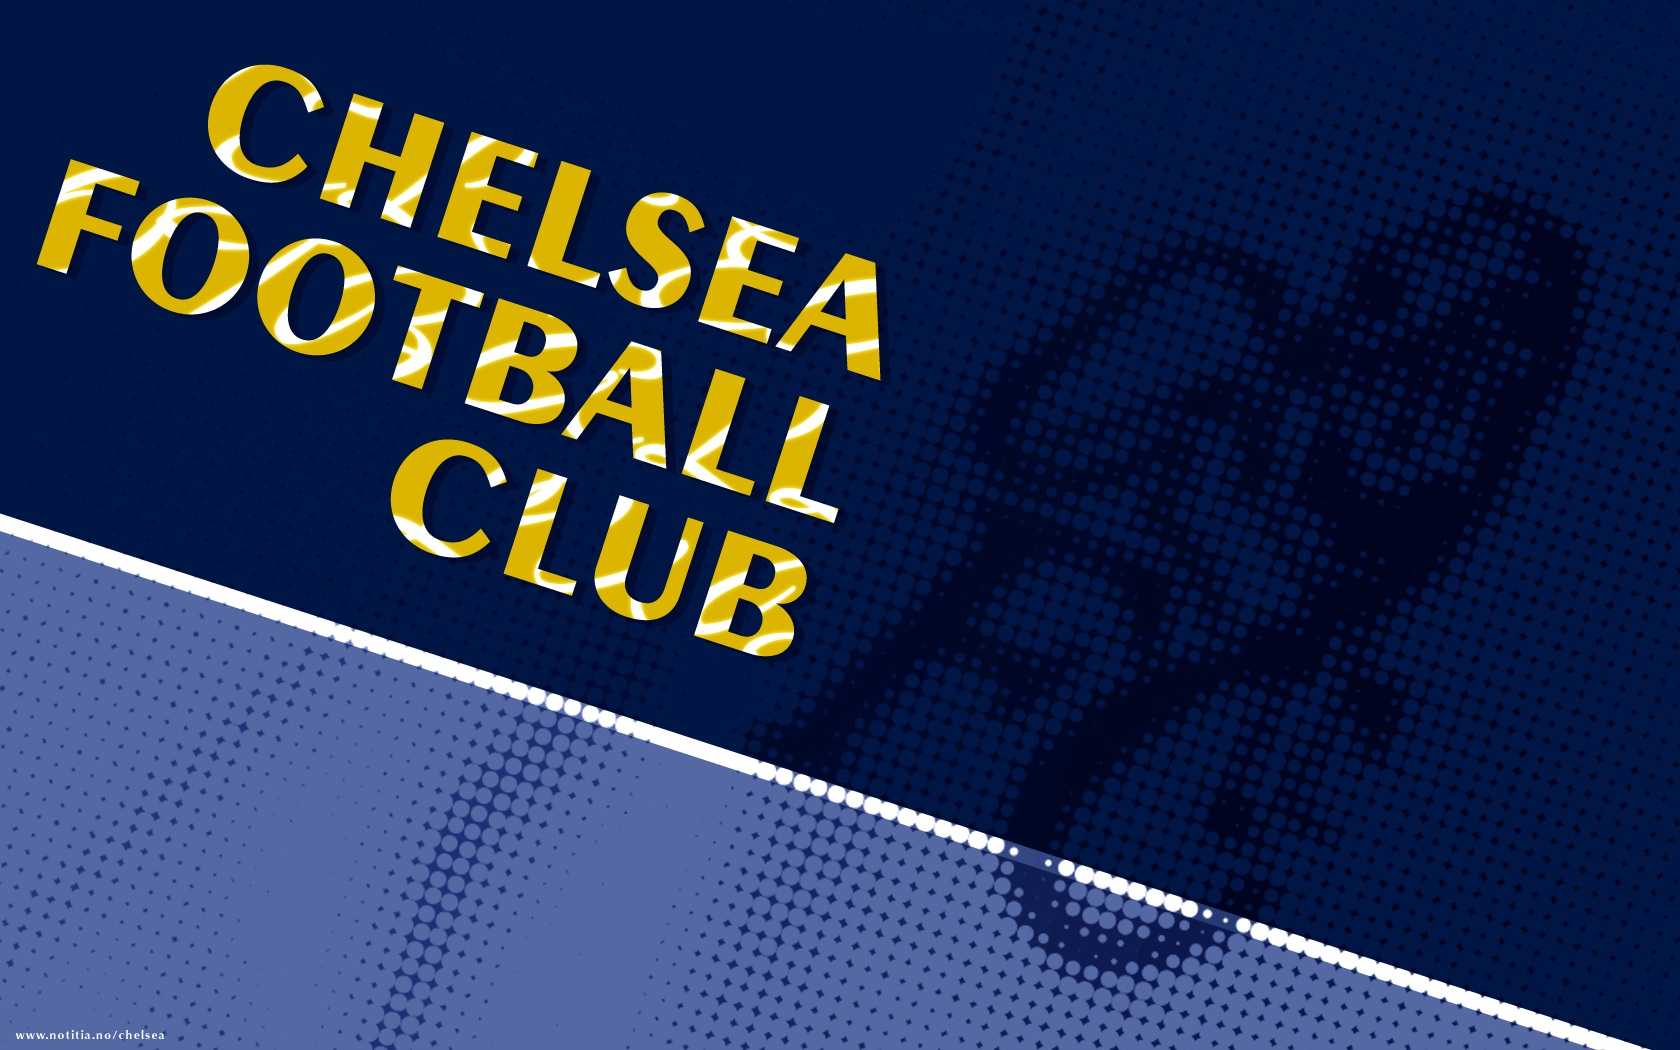 Chelsea Fc Desktop Background - Invitation Templates